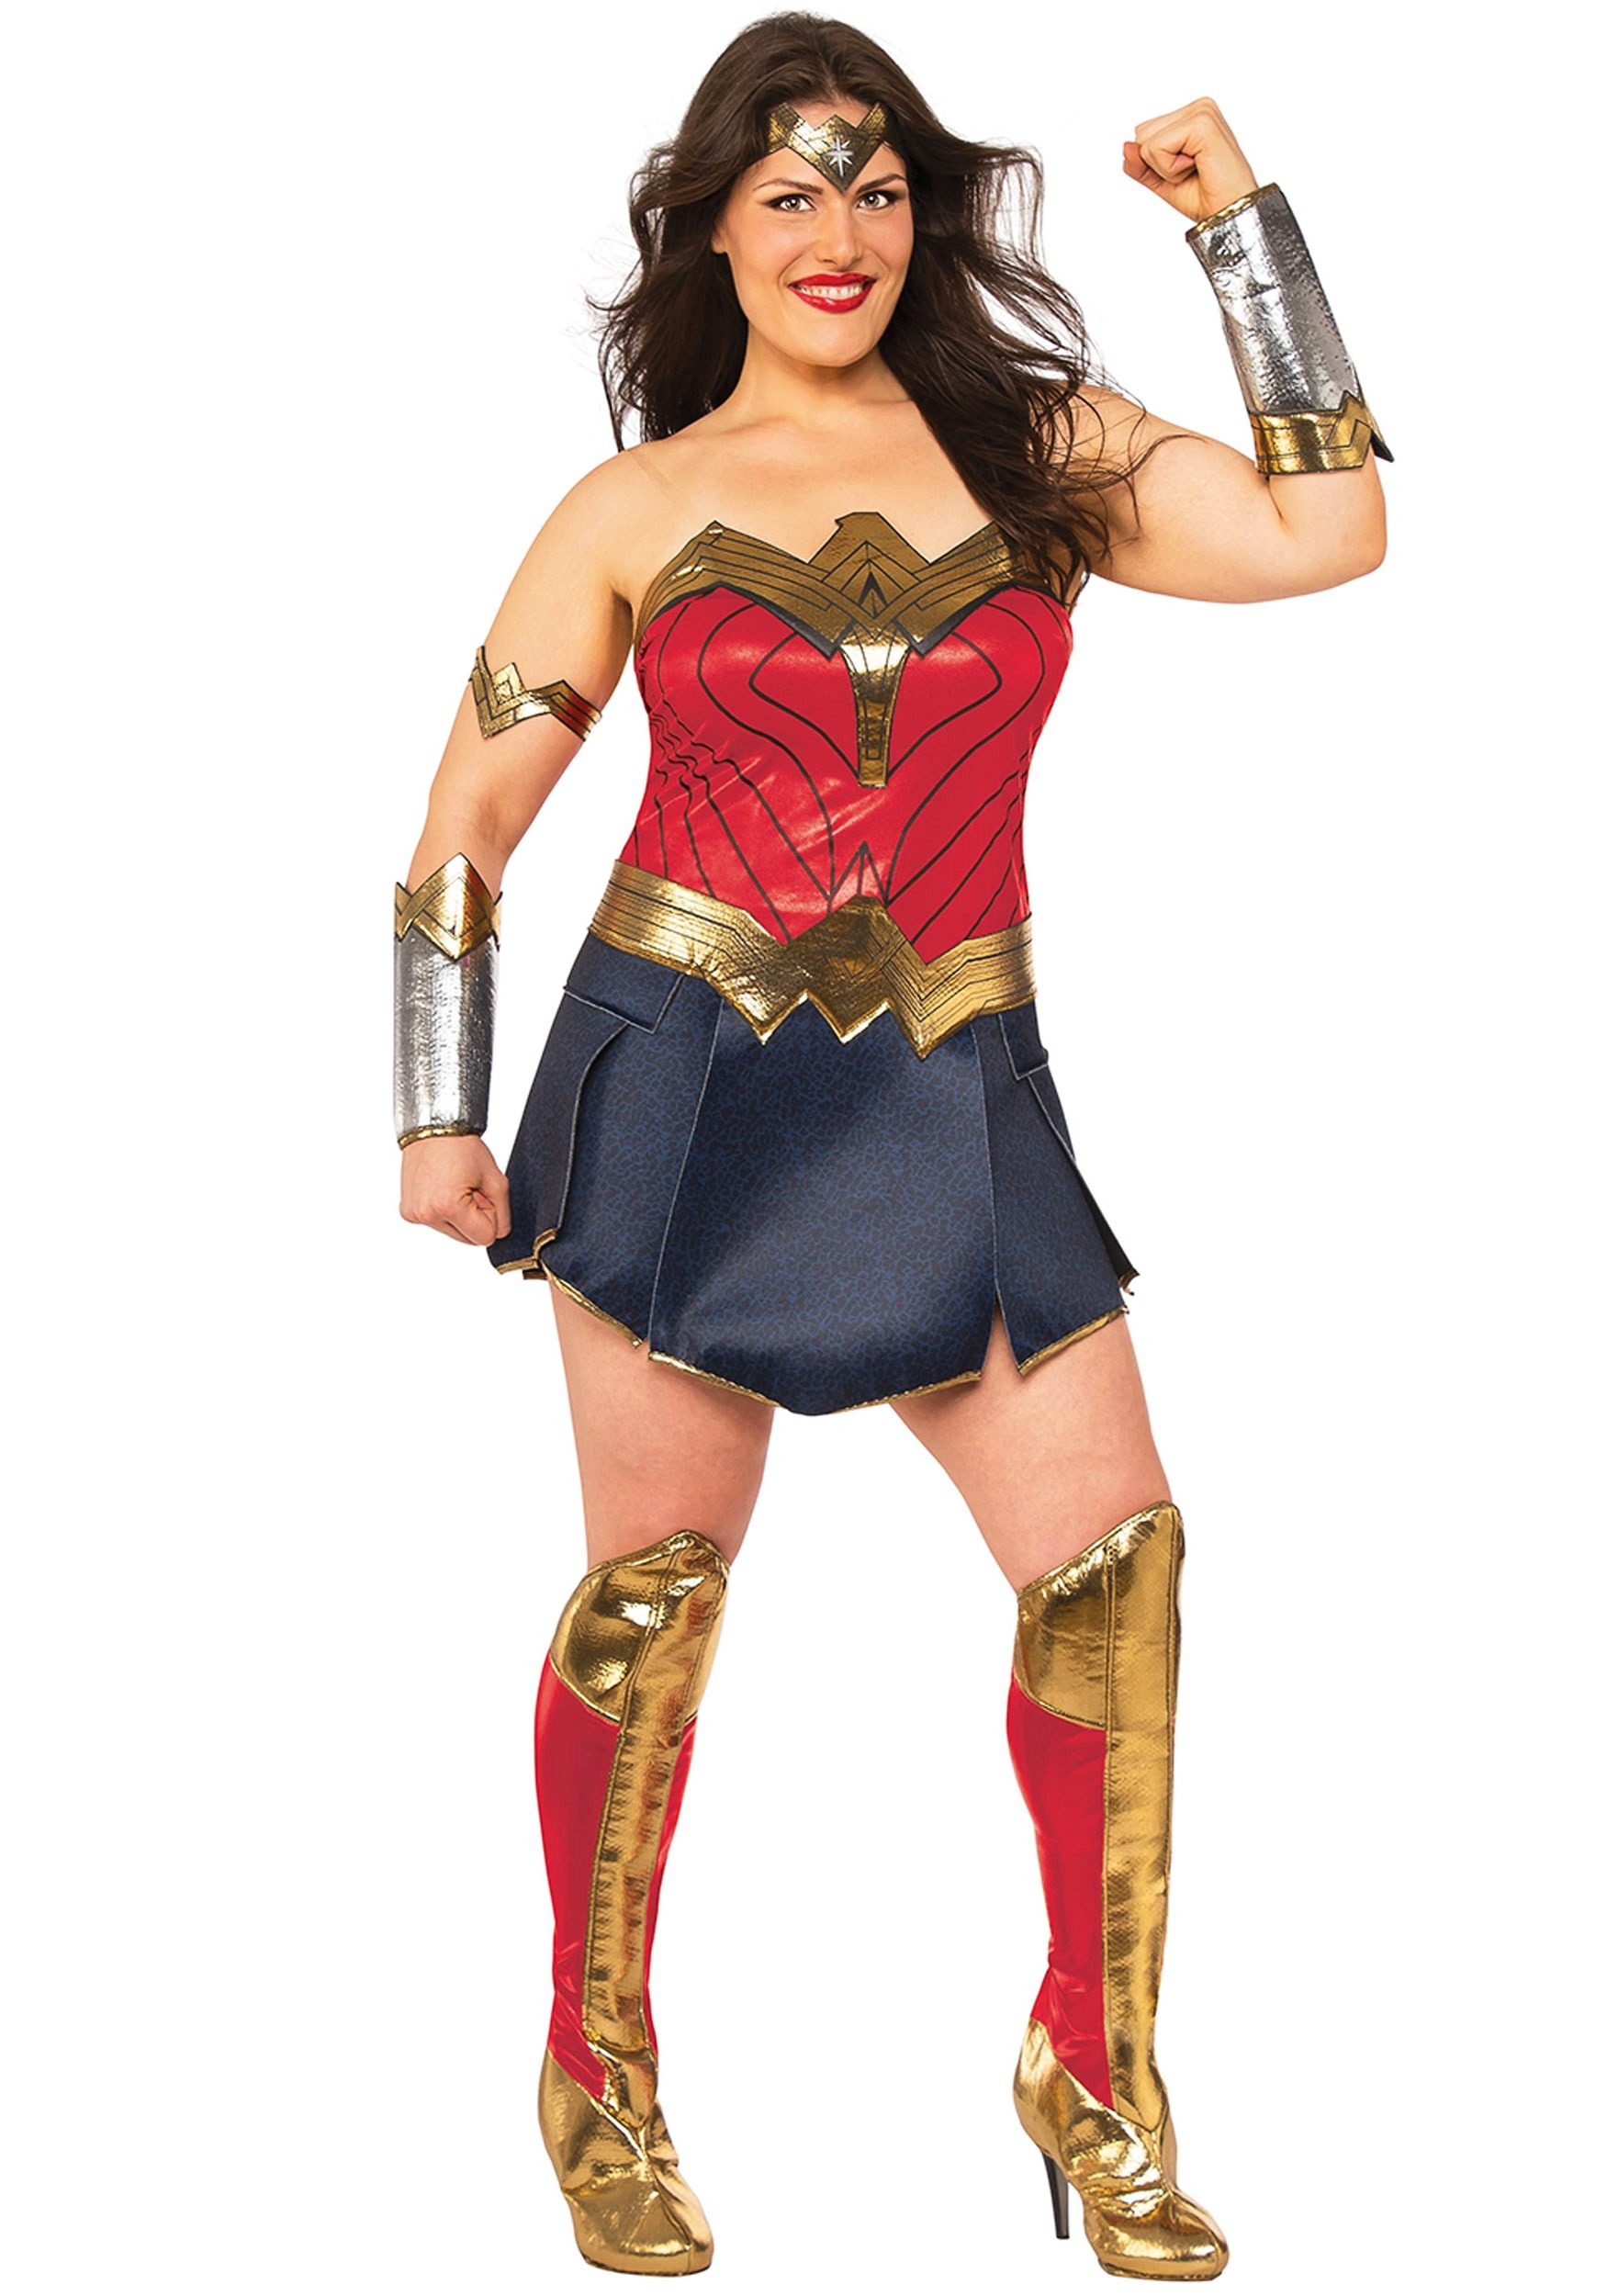 Plus Size Halloween Costumes Wonder Woman - Women's Wonder Woman Plus Size Costume